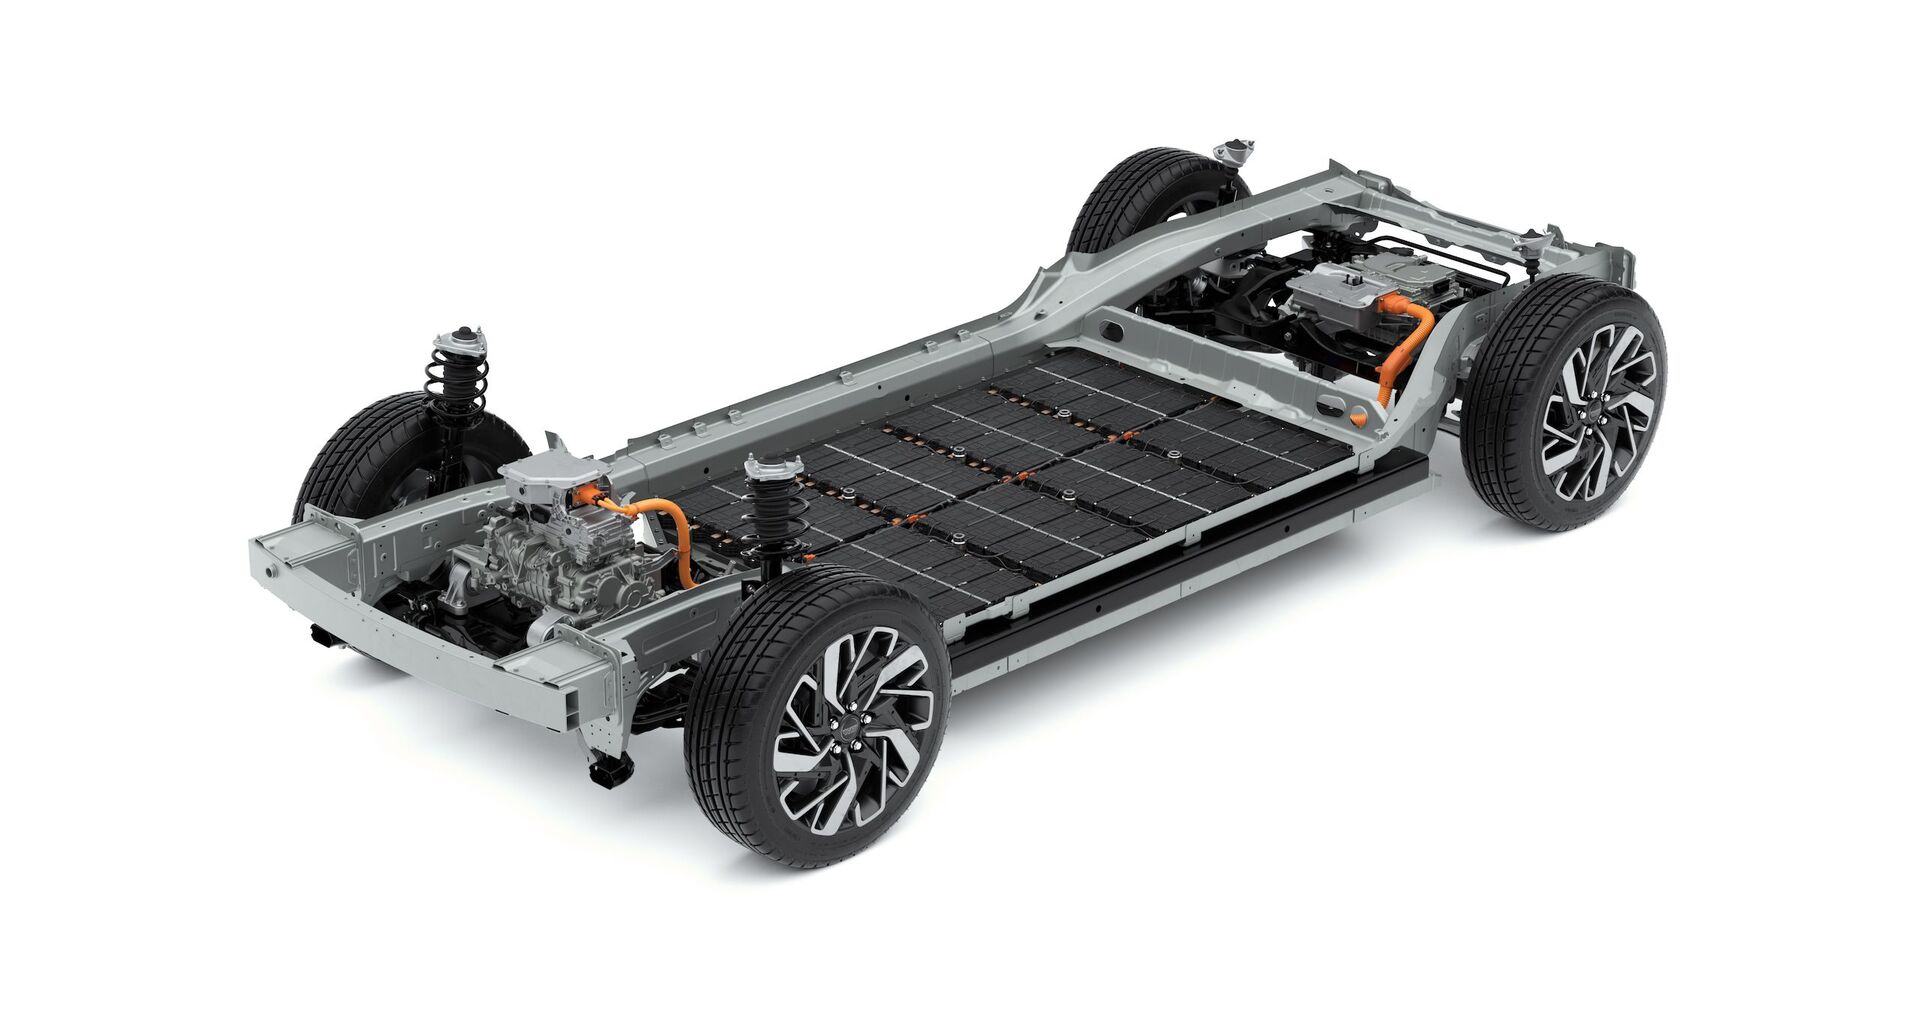 Platforma e-GMP pro elektromobily Hyundai / Kia